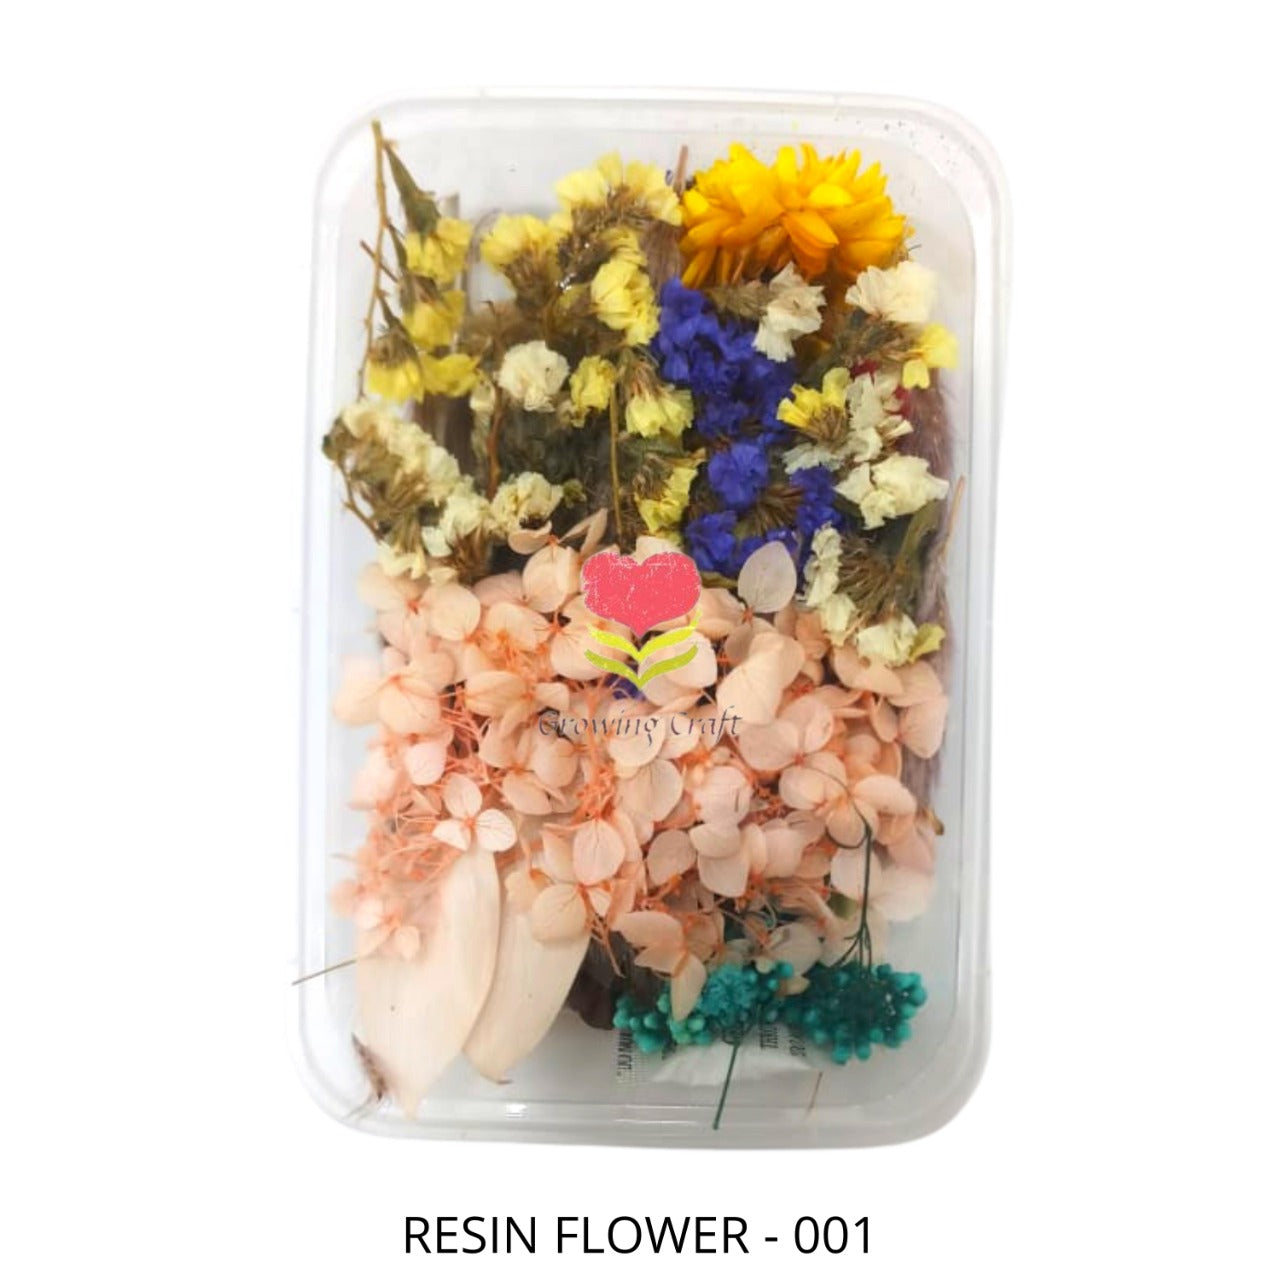 Dried Natural Flower - 001 - Growing Craft - Best craft Supplies